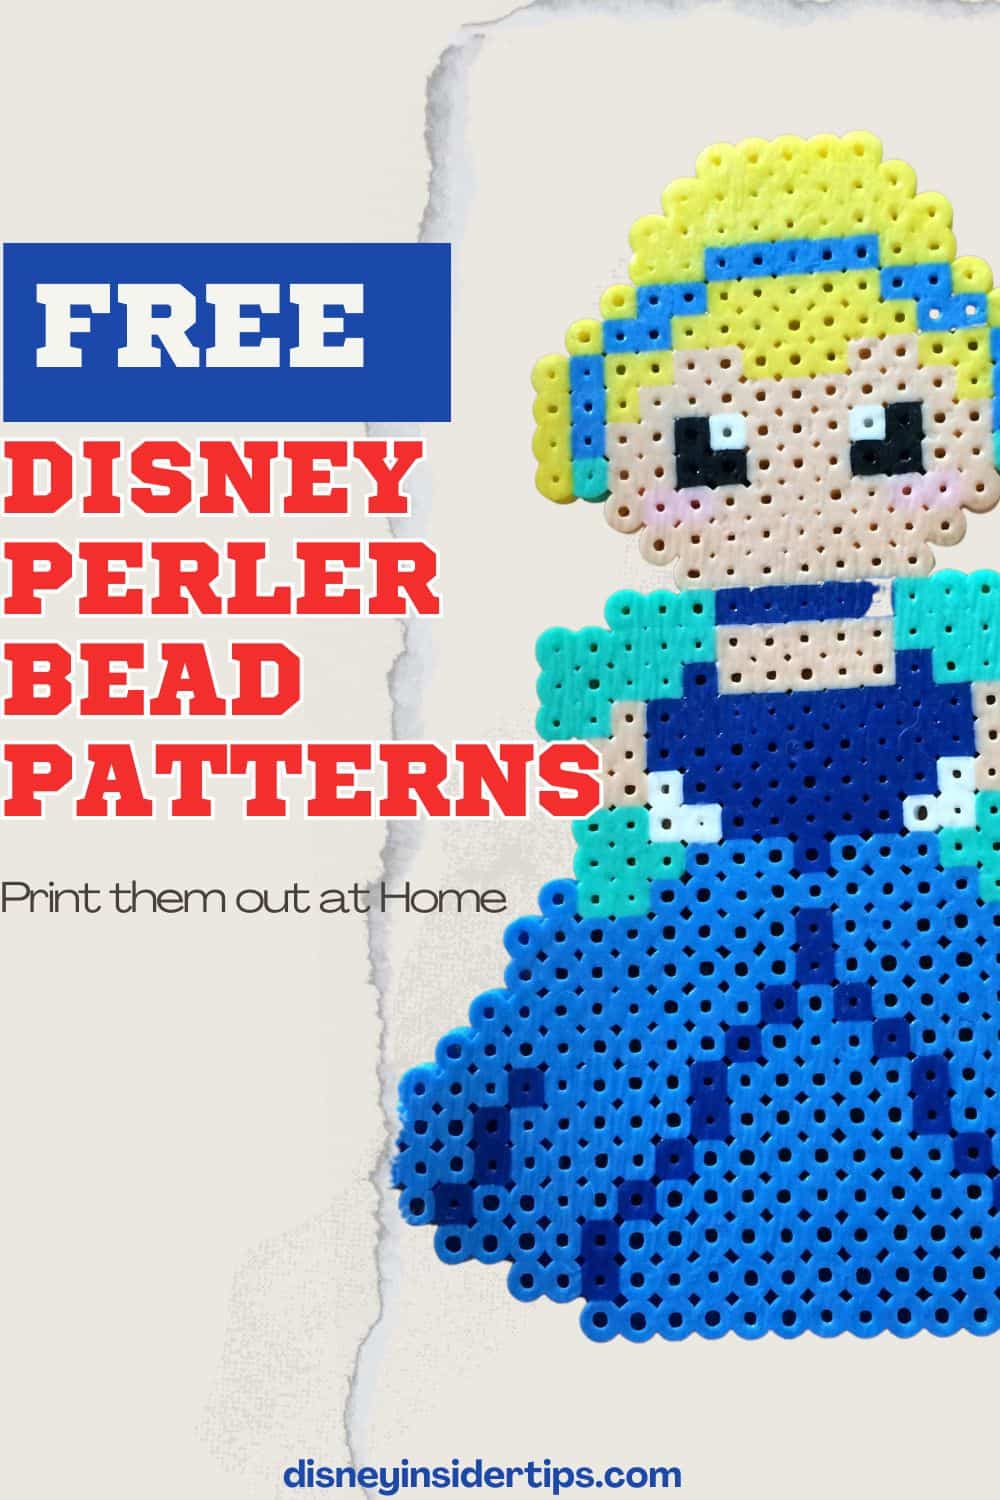 Free Disney Perler Bead Patterns